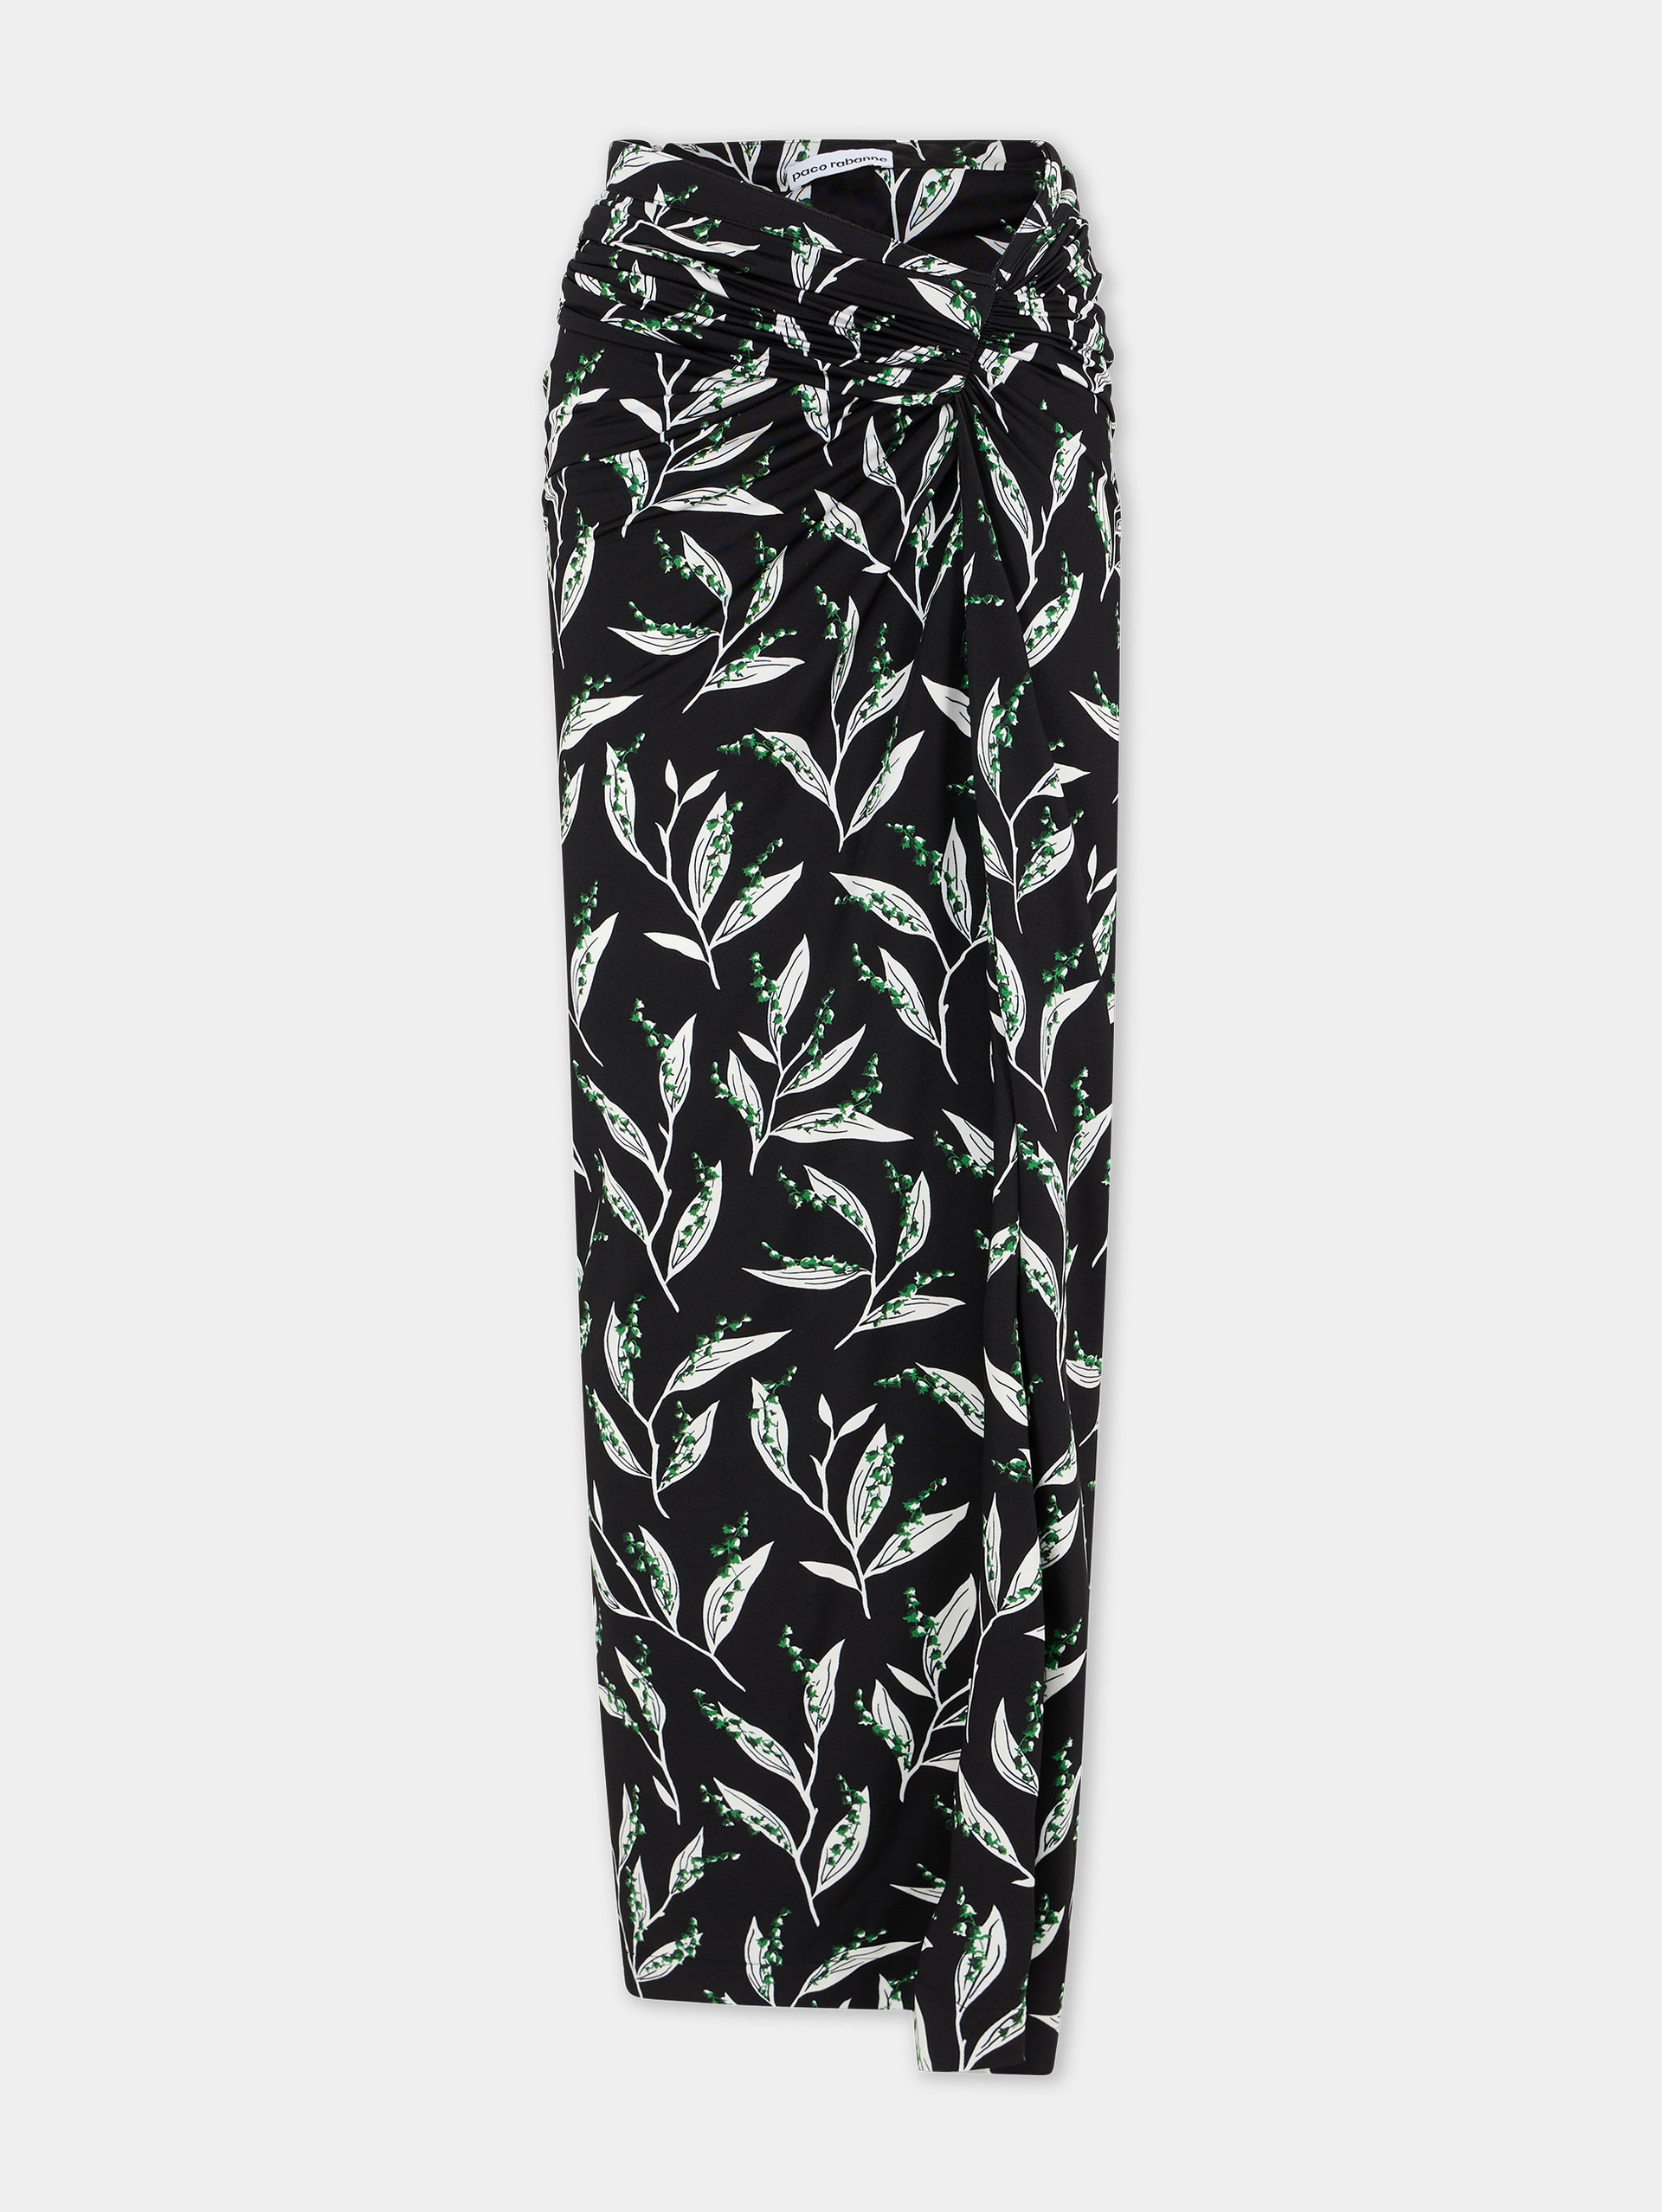 LONG black skirt with thrush print